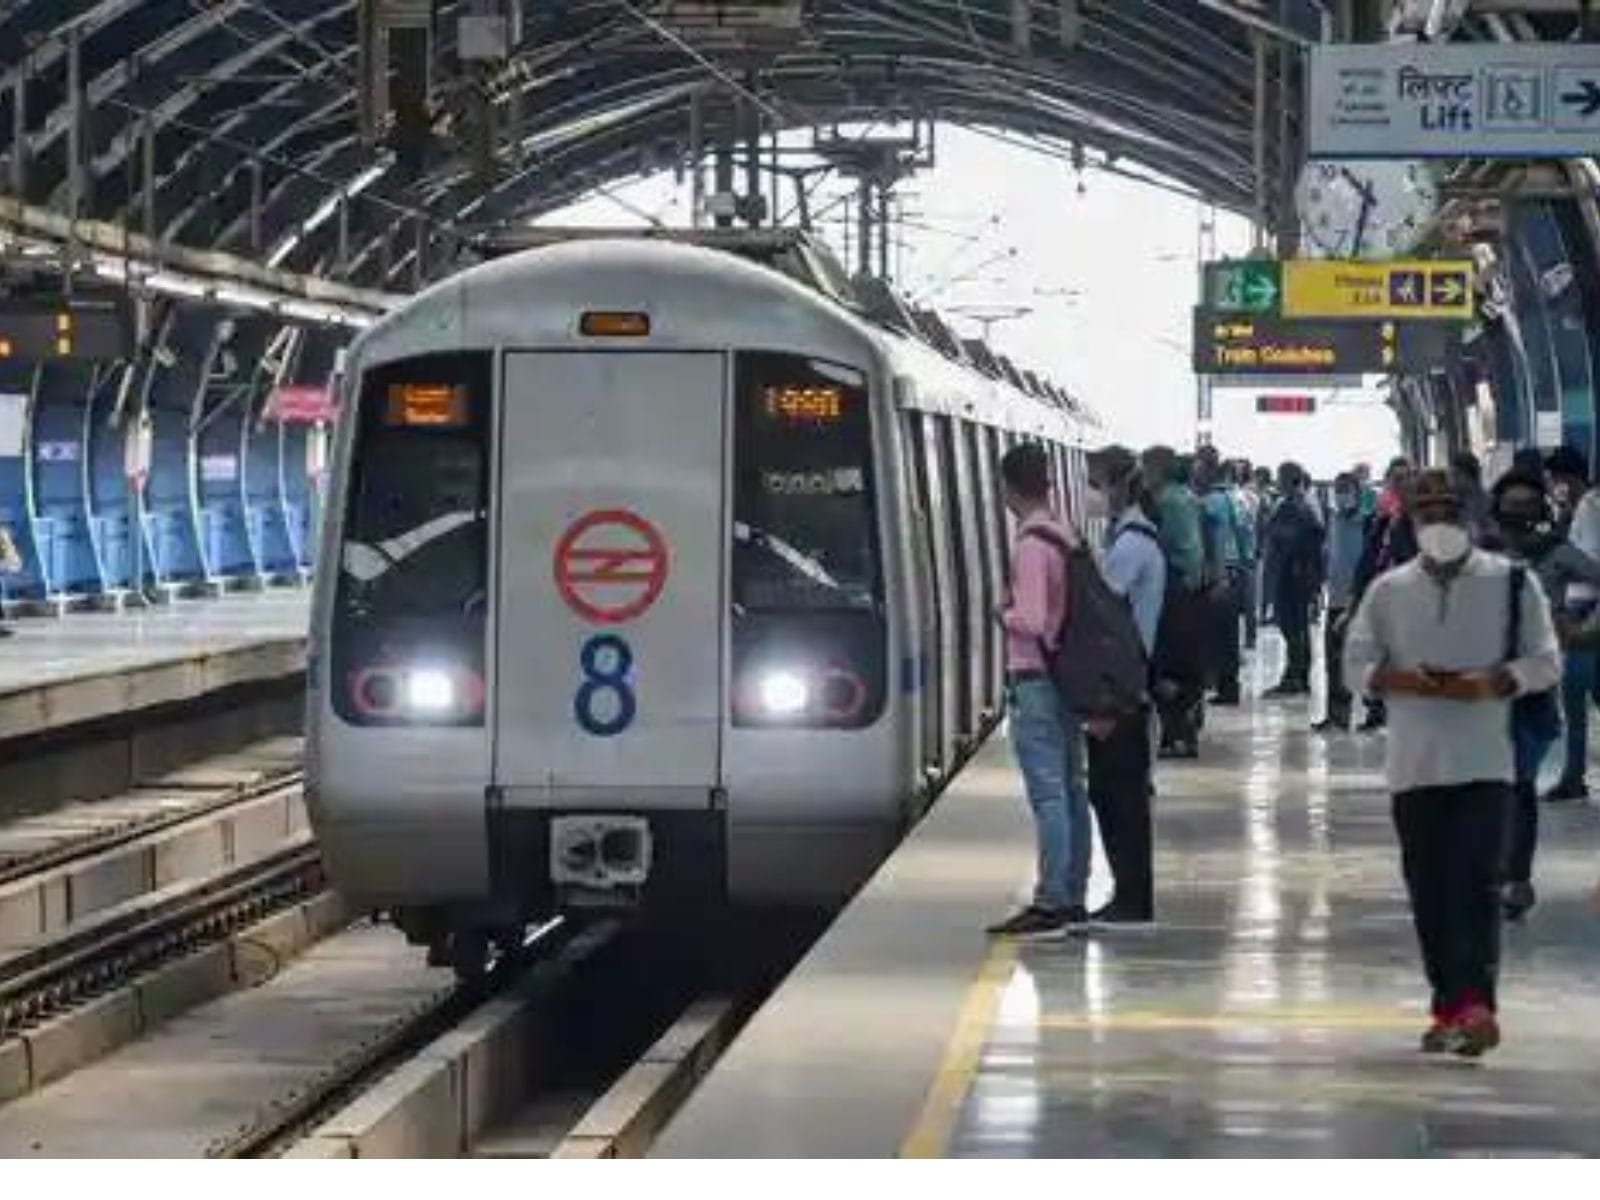 Delhi Metro Pictures  Download Free Images on Unsplash